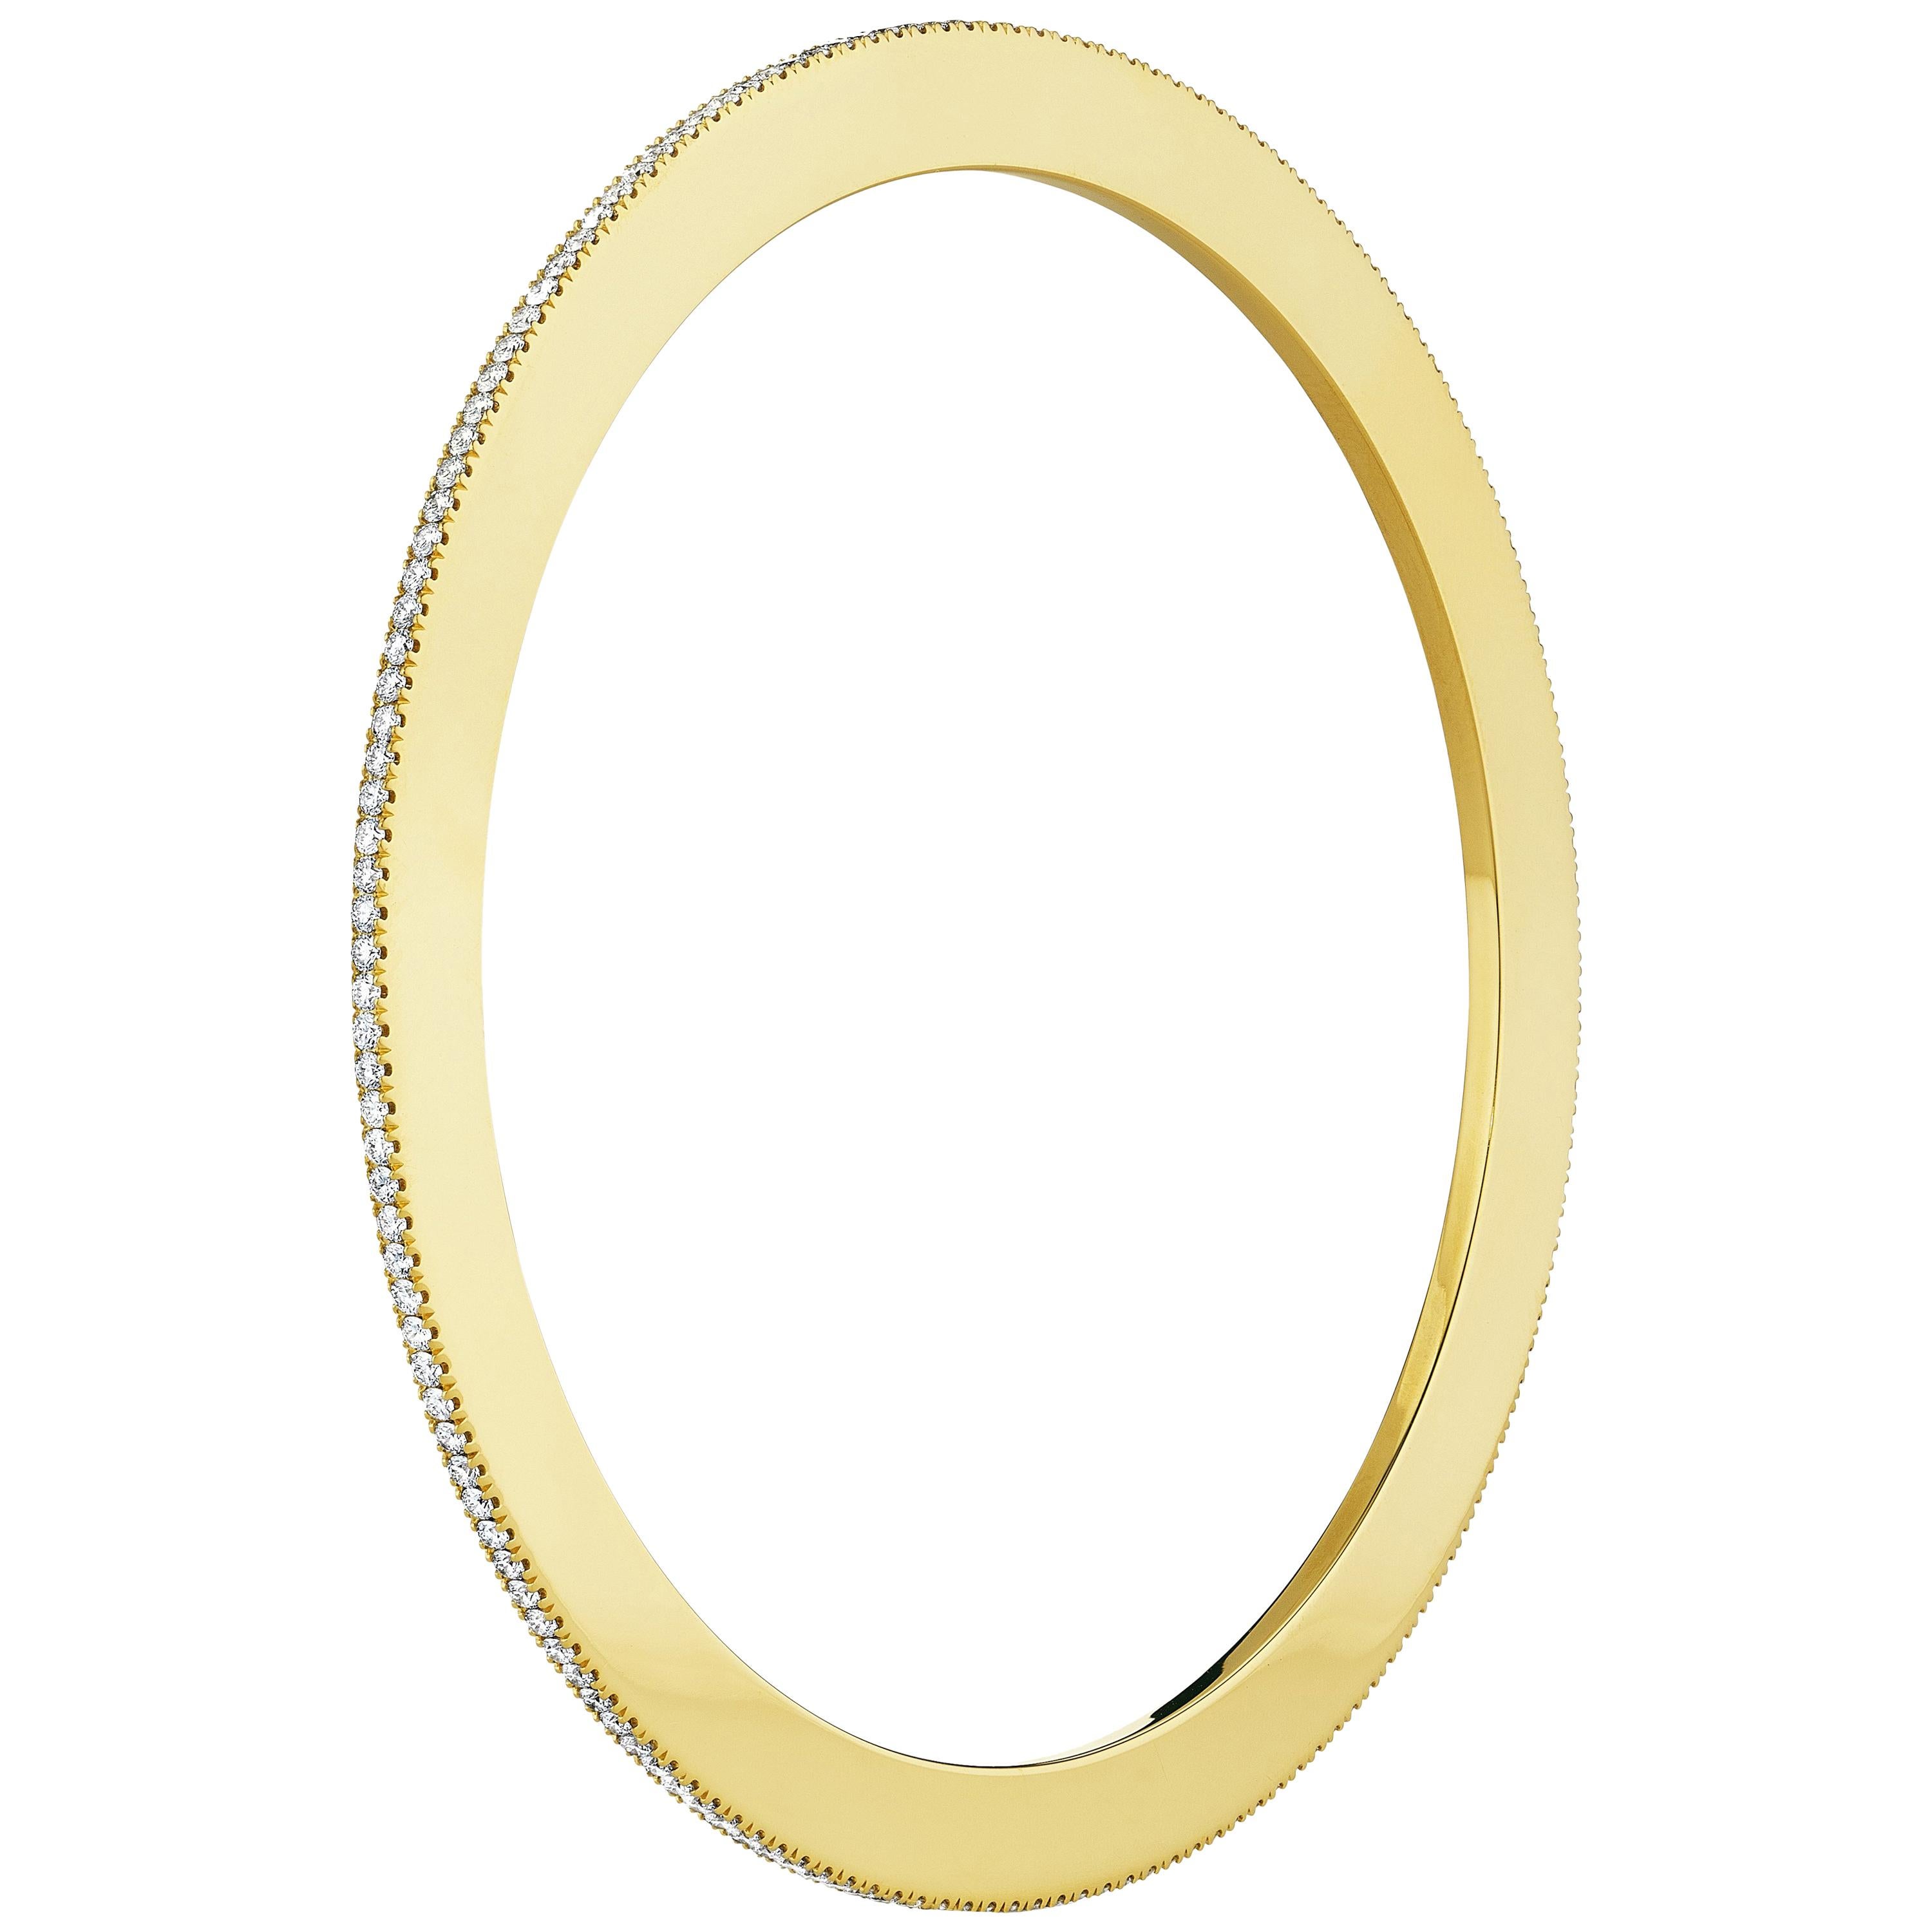 Cadar Solo Bracelet, 18 Karat Yellow Gold and 1.93 Carat White Diamonds, Medium